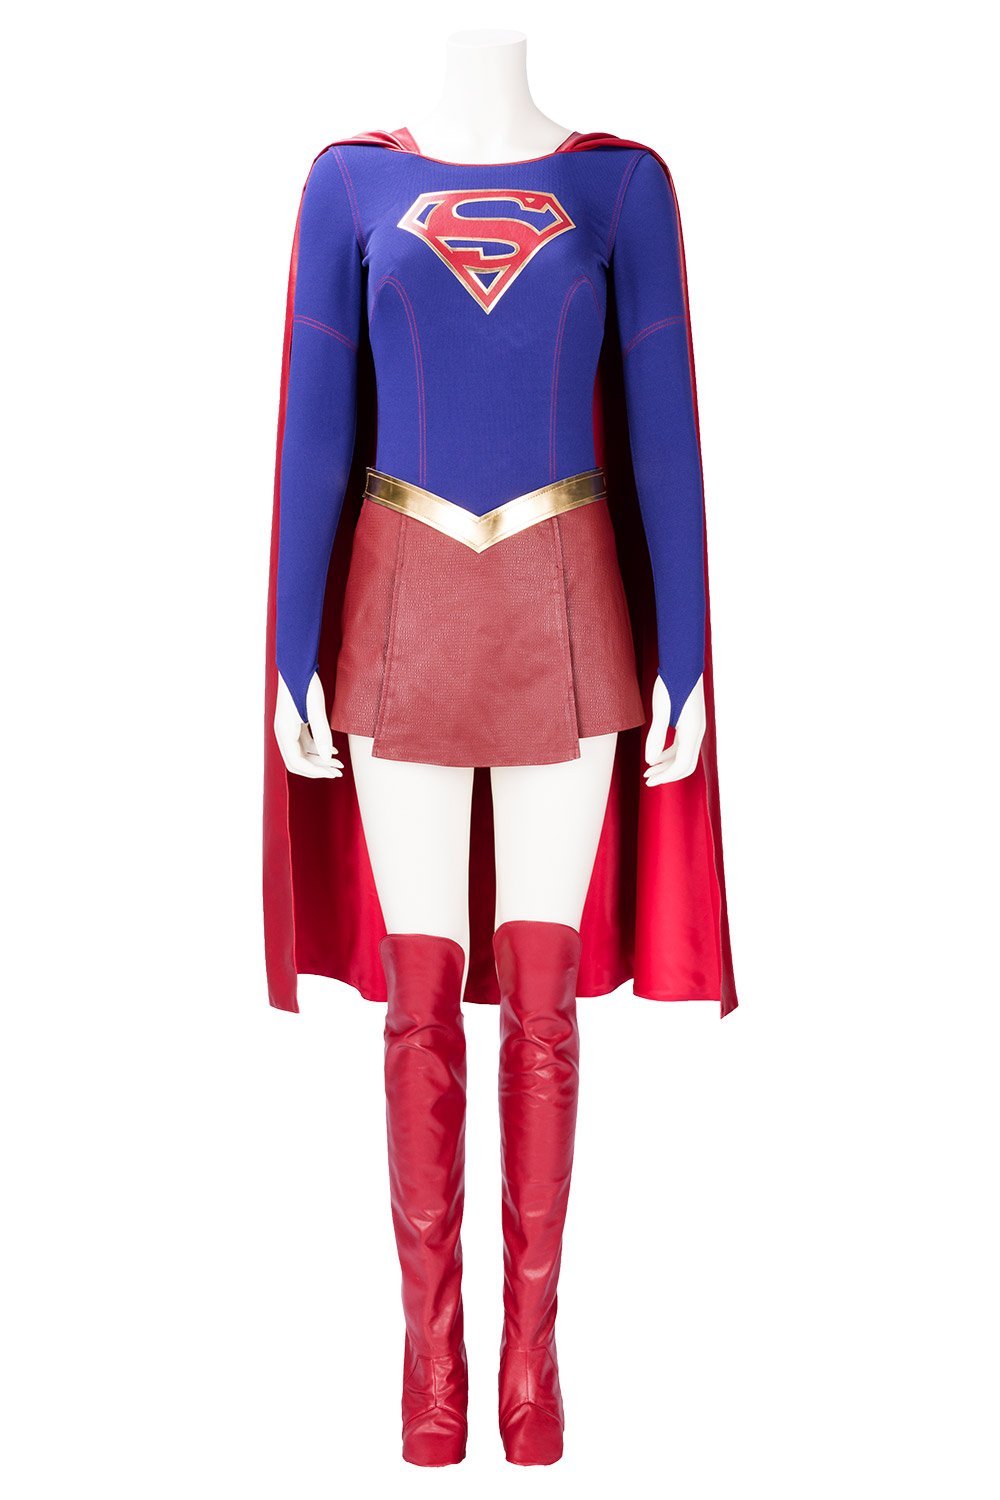 Supergirl Superwoman Kara Danvers Outfit Cosplay Costume Adult New Cosplaysky 1039